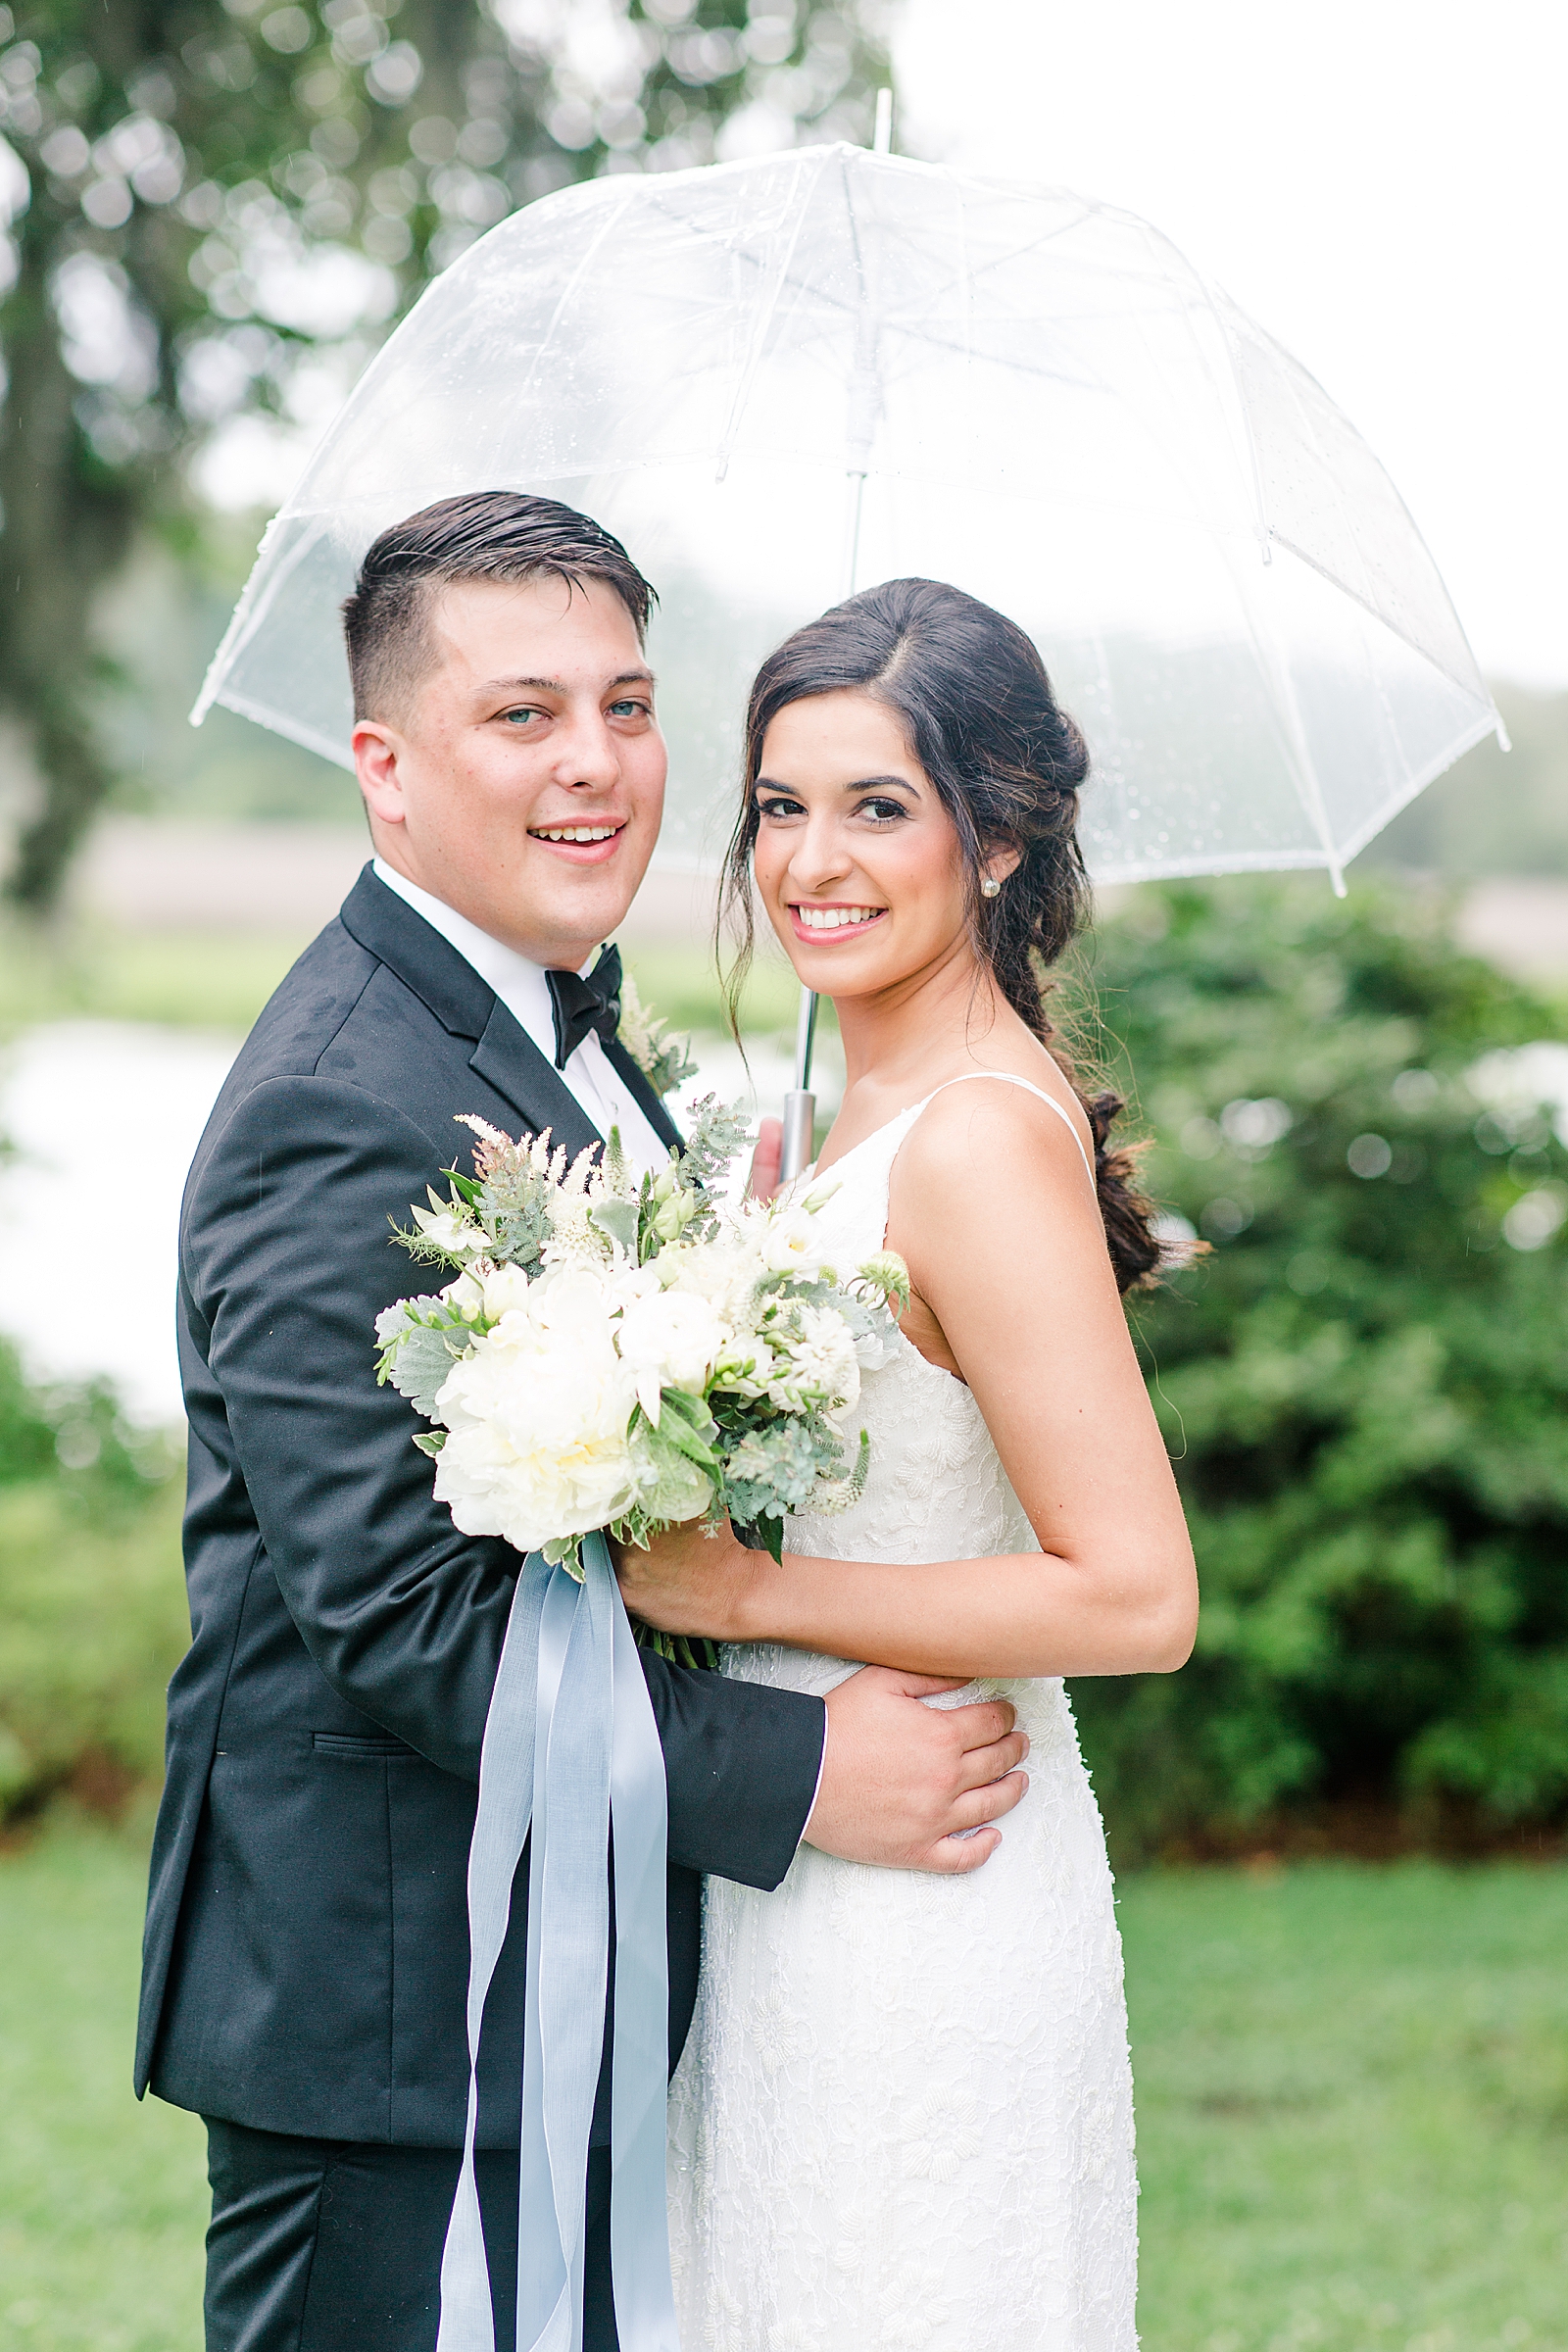 Rainy Wedding Day Couple Under Umbrella Photo 